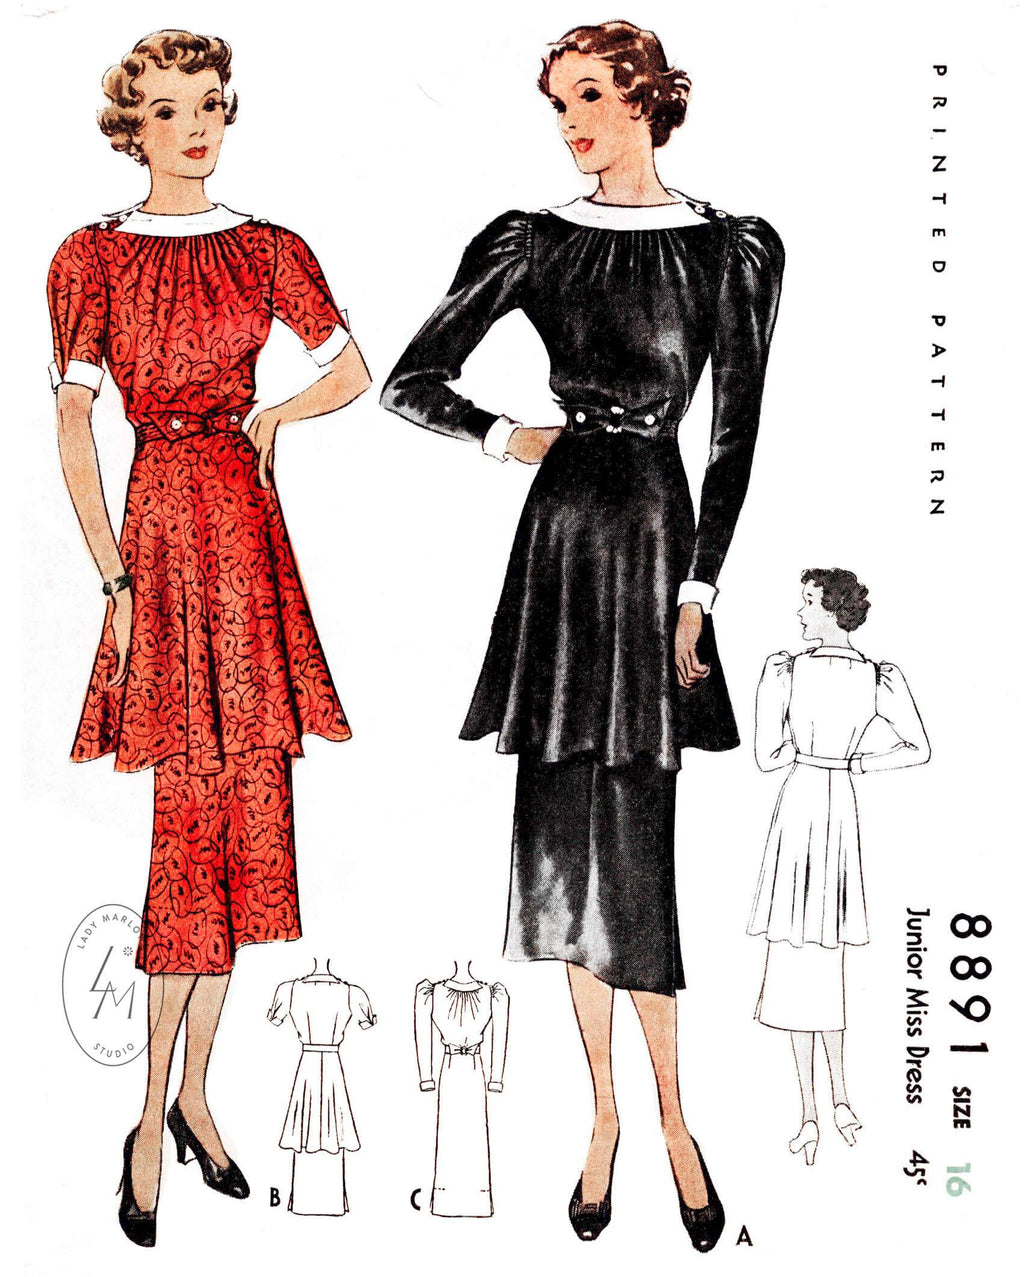 McCall 8891 1930s 1936 tunic dress shirring detail vintage sewing pattern repro